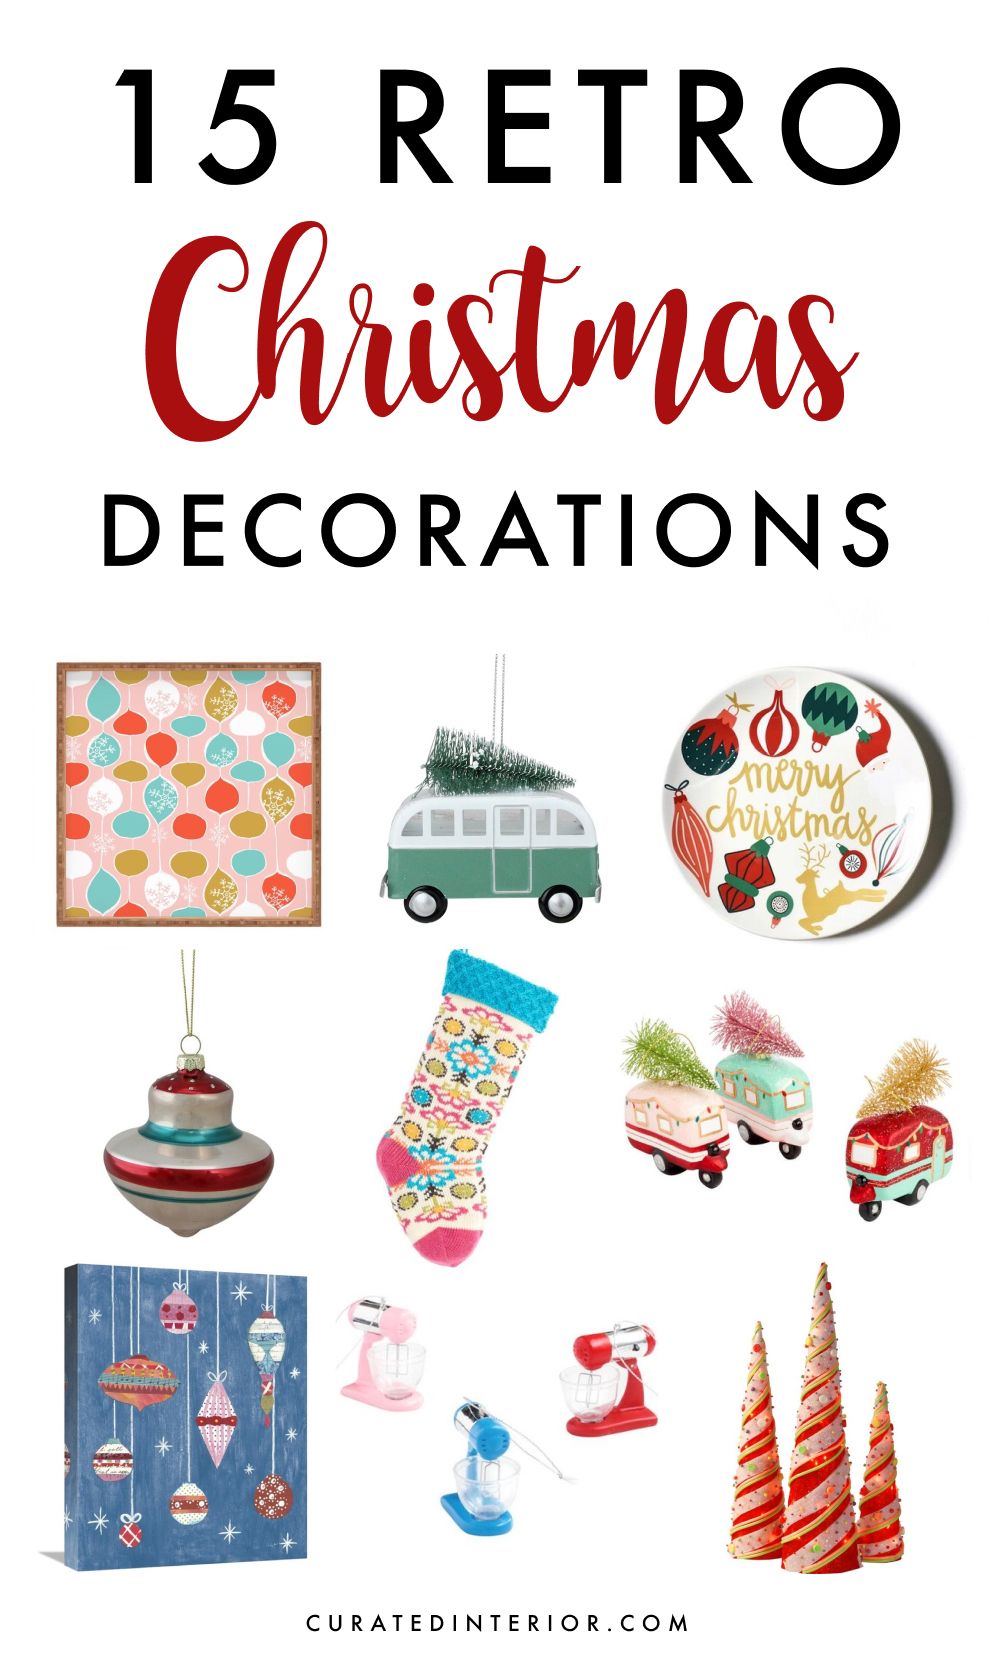 15 Retro Christmas Decorations